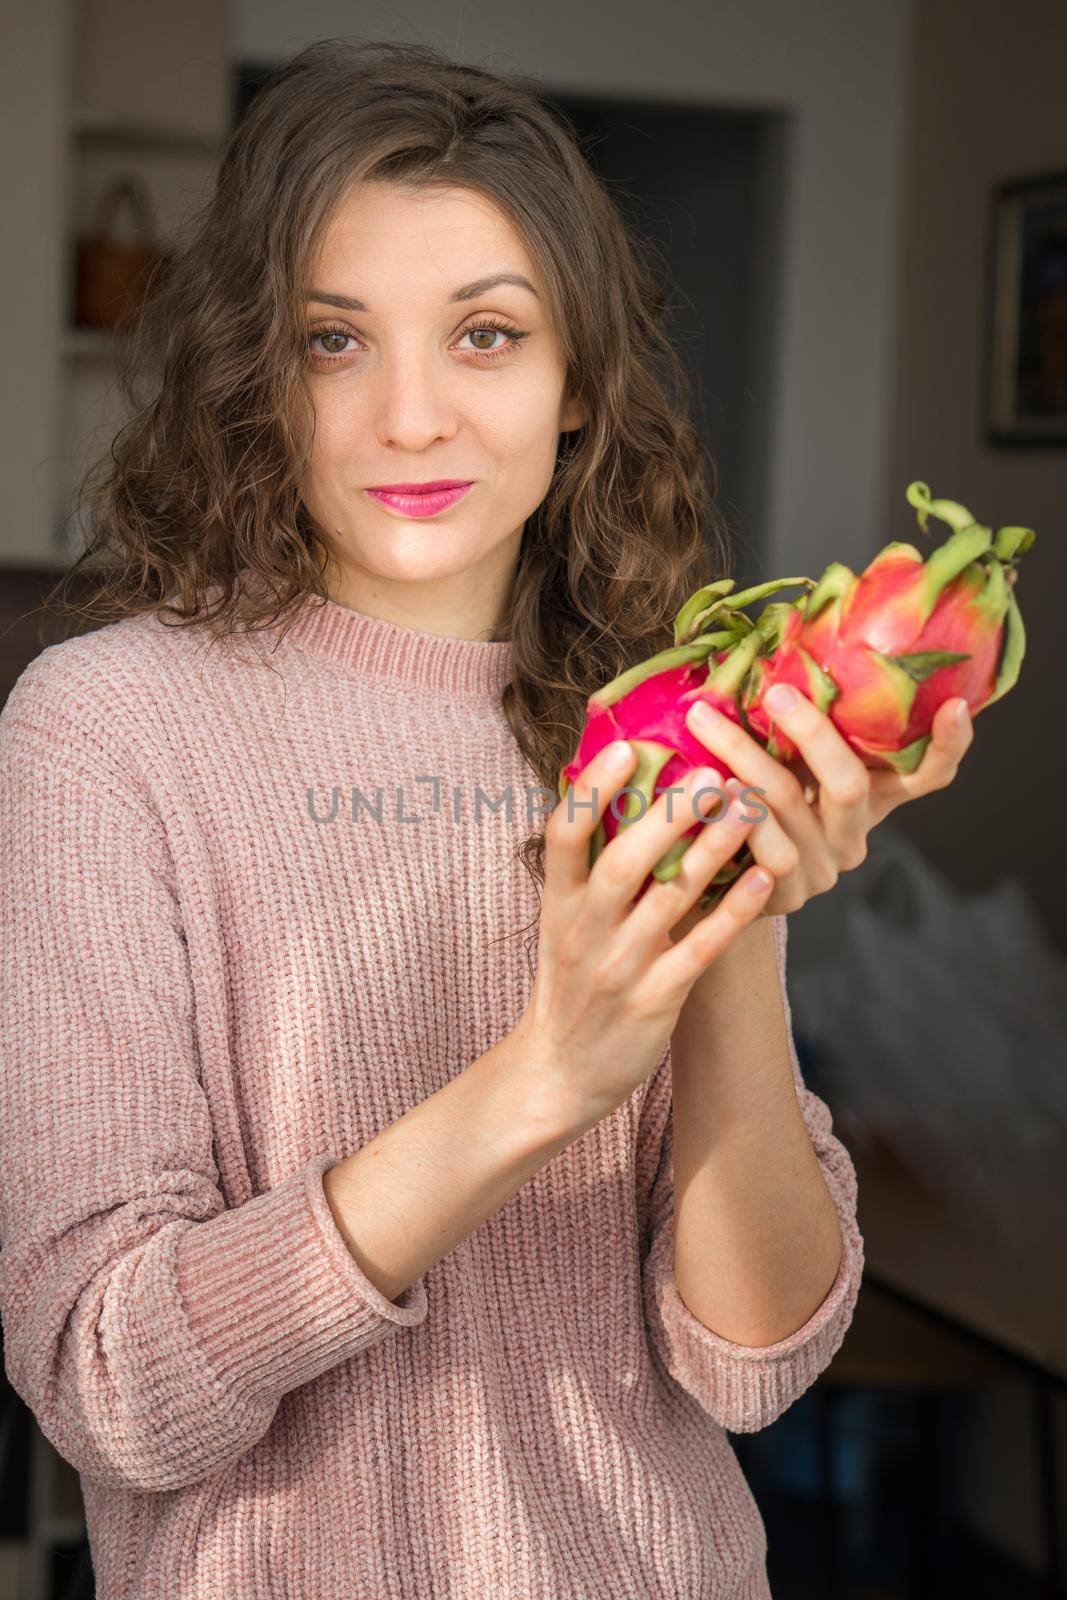 Young girl is holding two fresh ripe organic dragon fruits or pitaya, pitahaya. Exotic fruits, healthy eating concept.